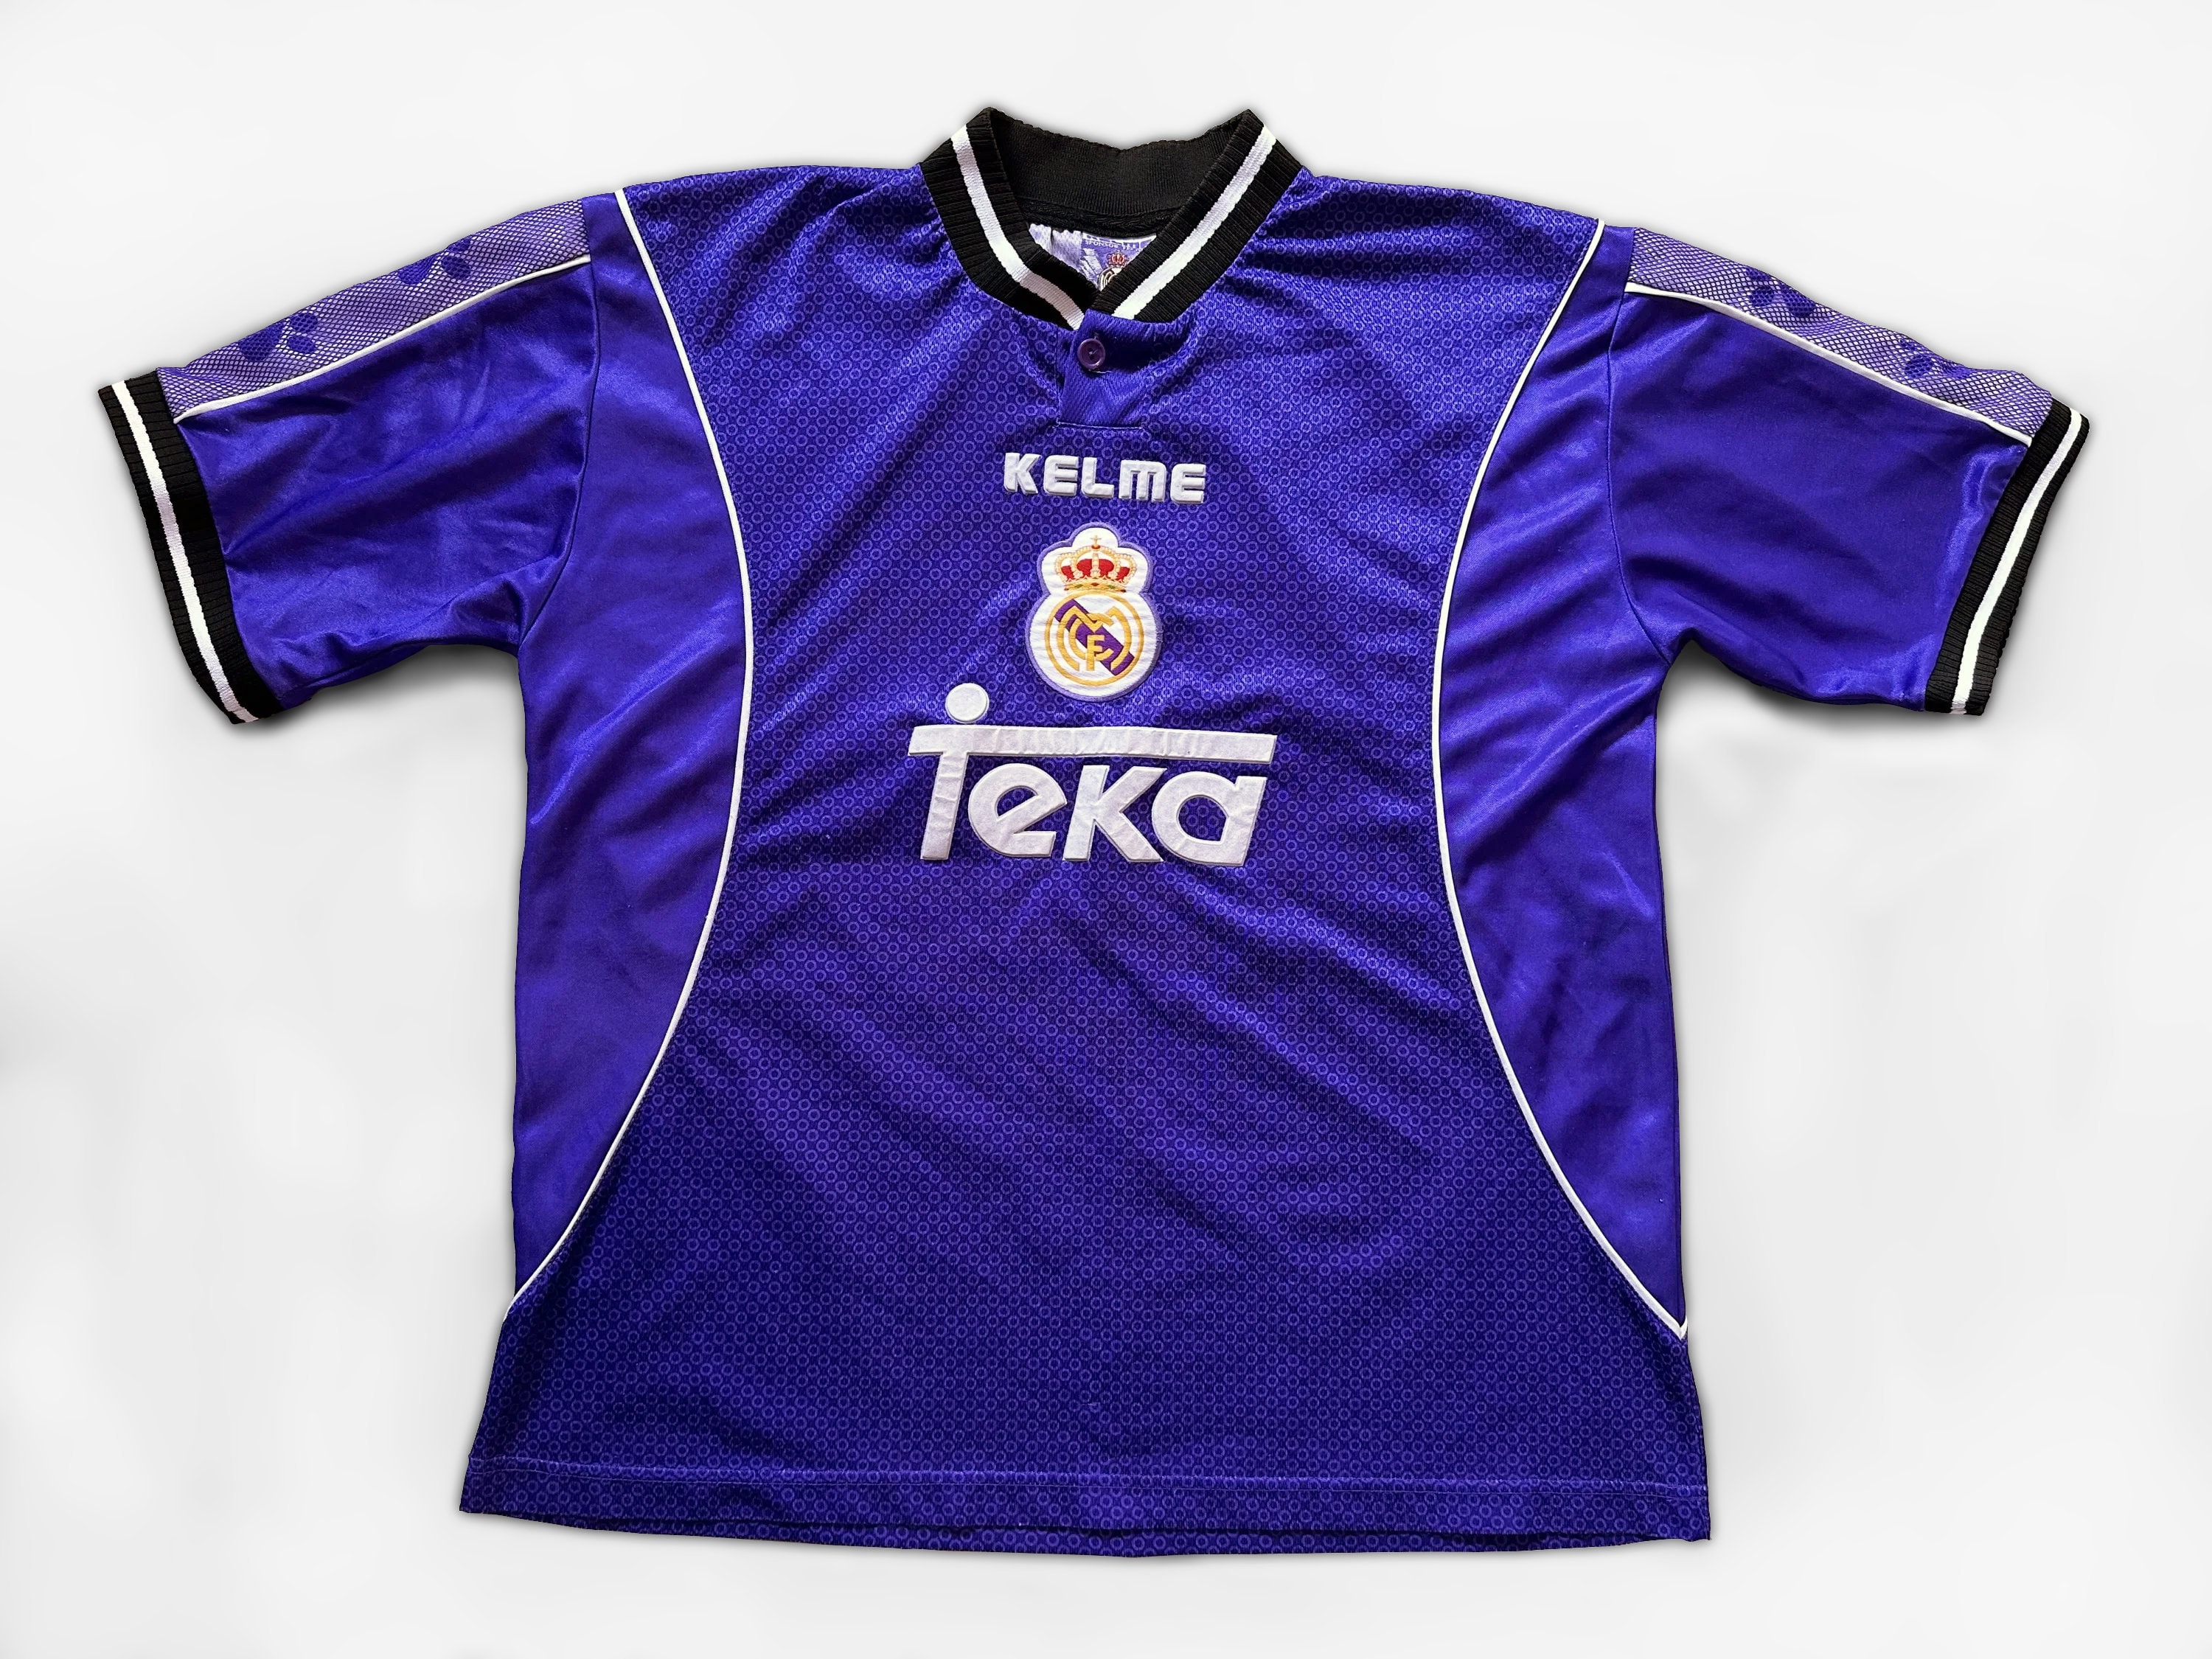 1998/00 RAUL #10 Spain Vintage adidas Home Football Shirt (S